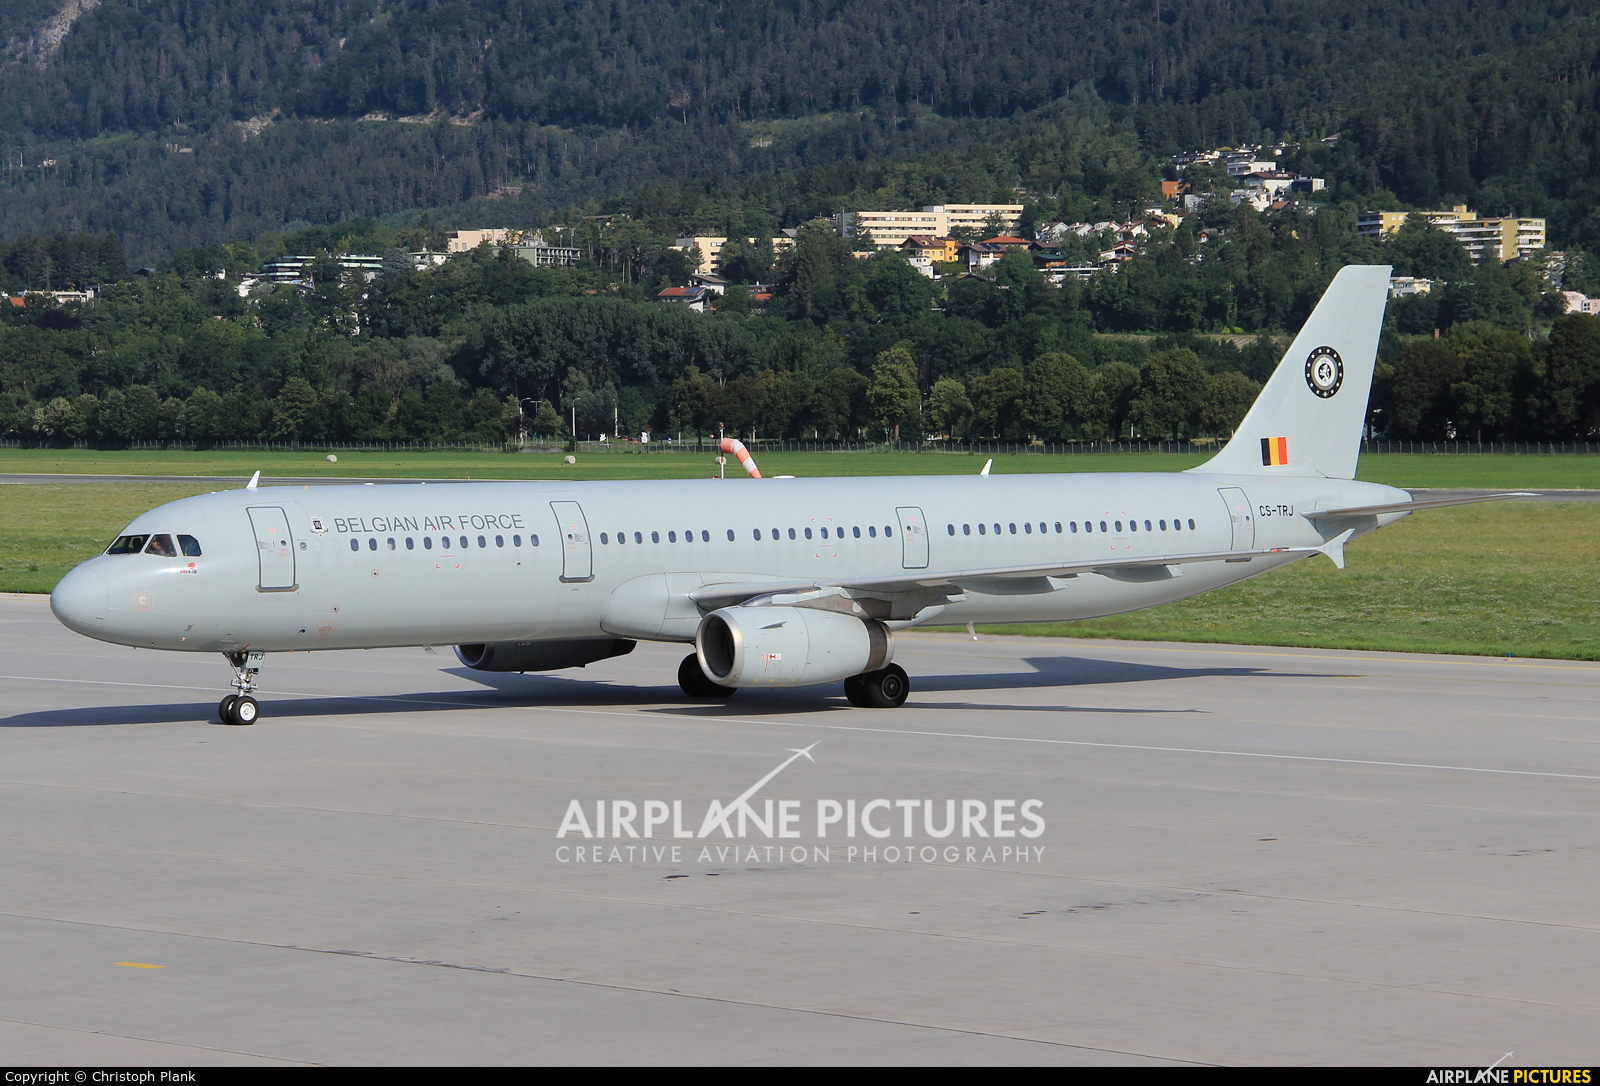 Belgium - Air Force CS-TRJ aircraft at Innsbruck